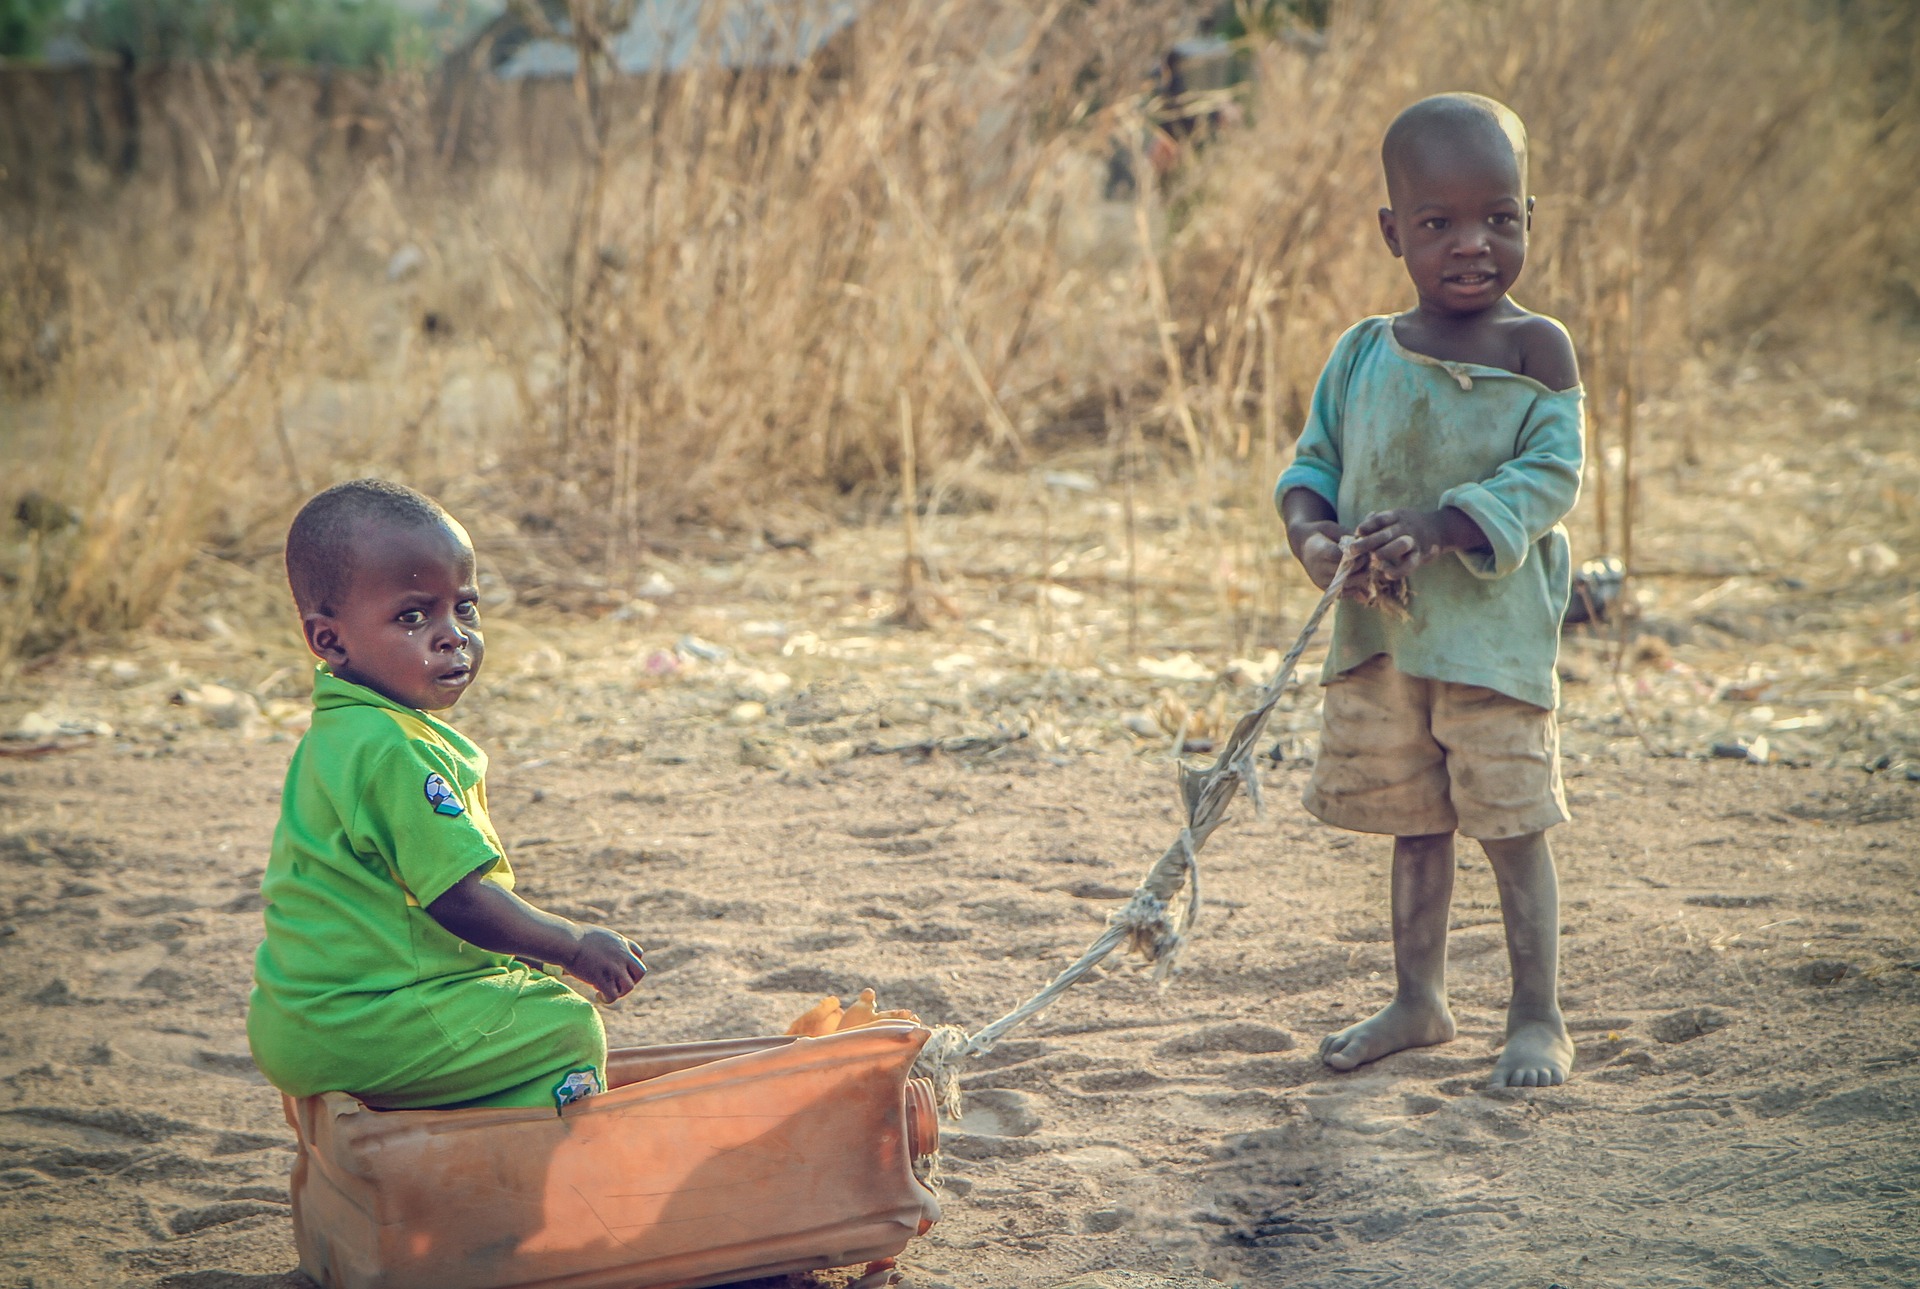 Nigerian children playing in the street